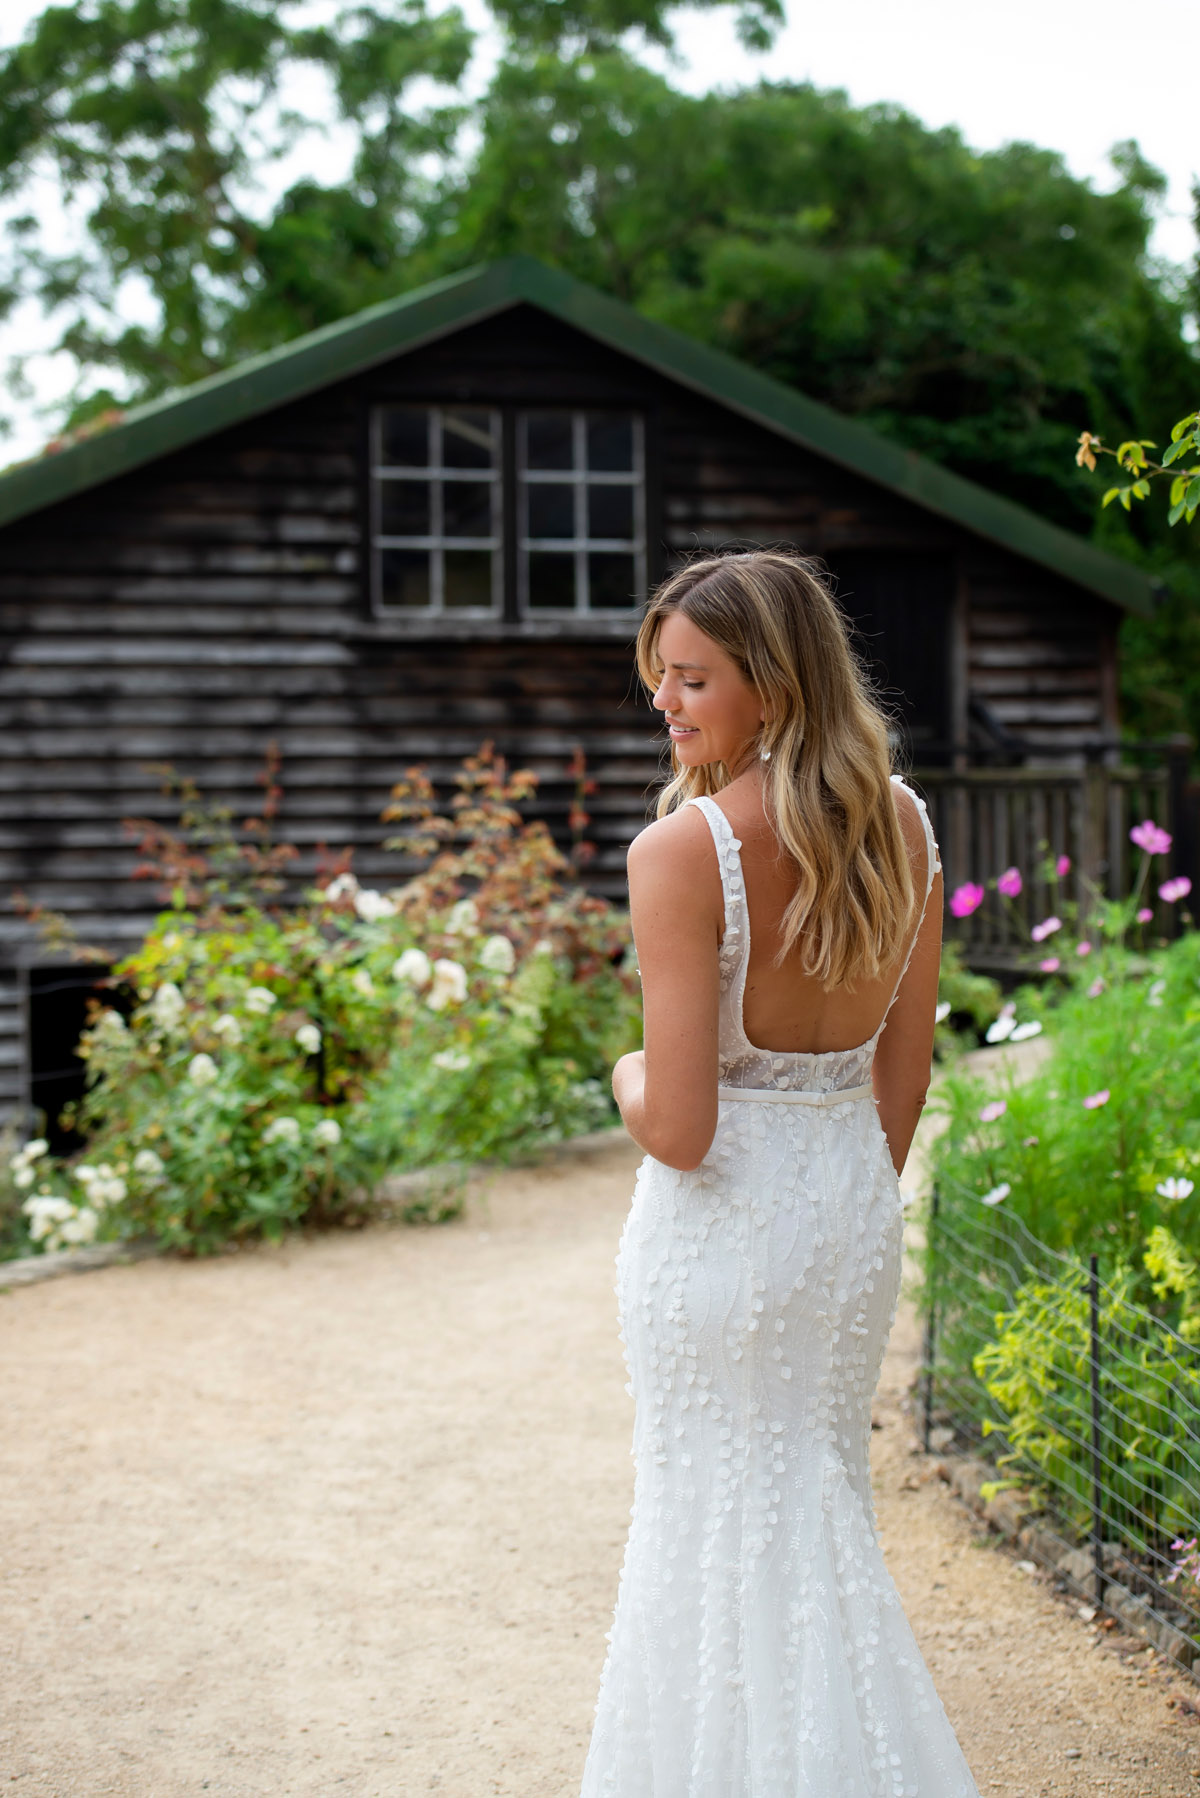 The Petal Fitted Dress, Blackburn Bridal Couture - Secret Garden Collection